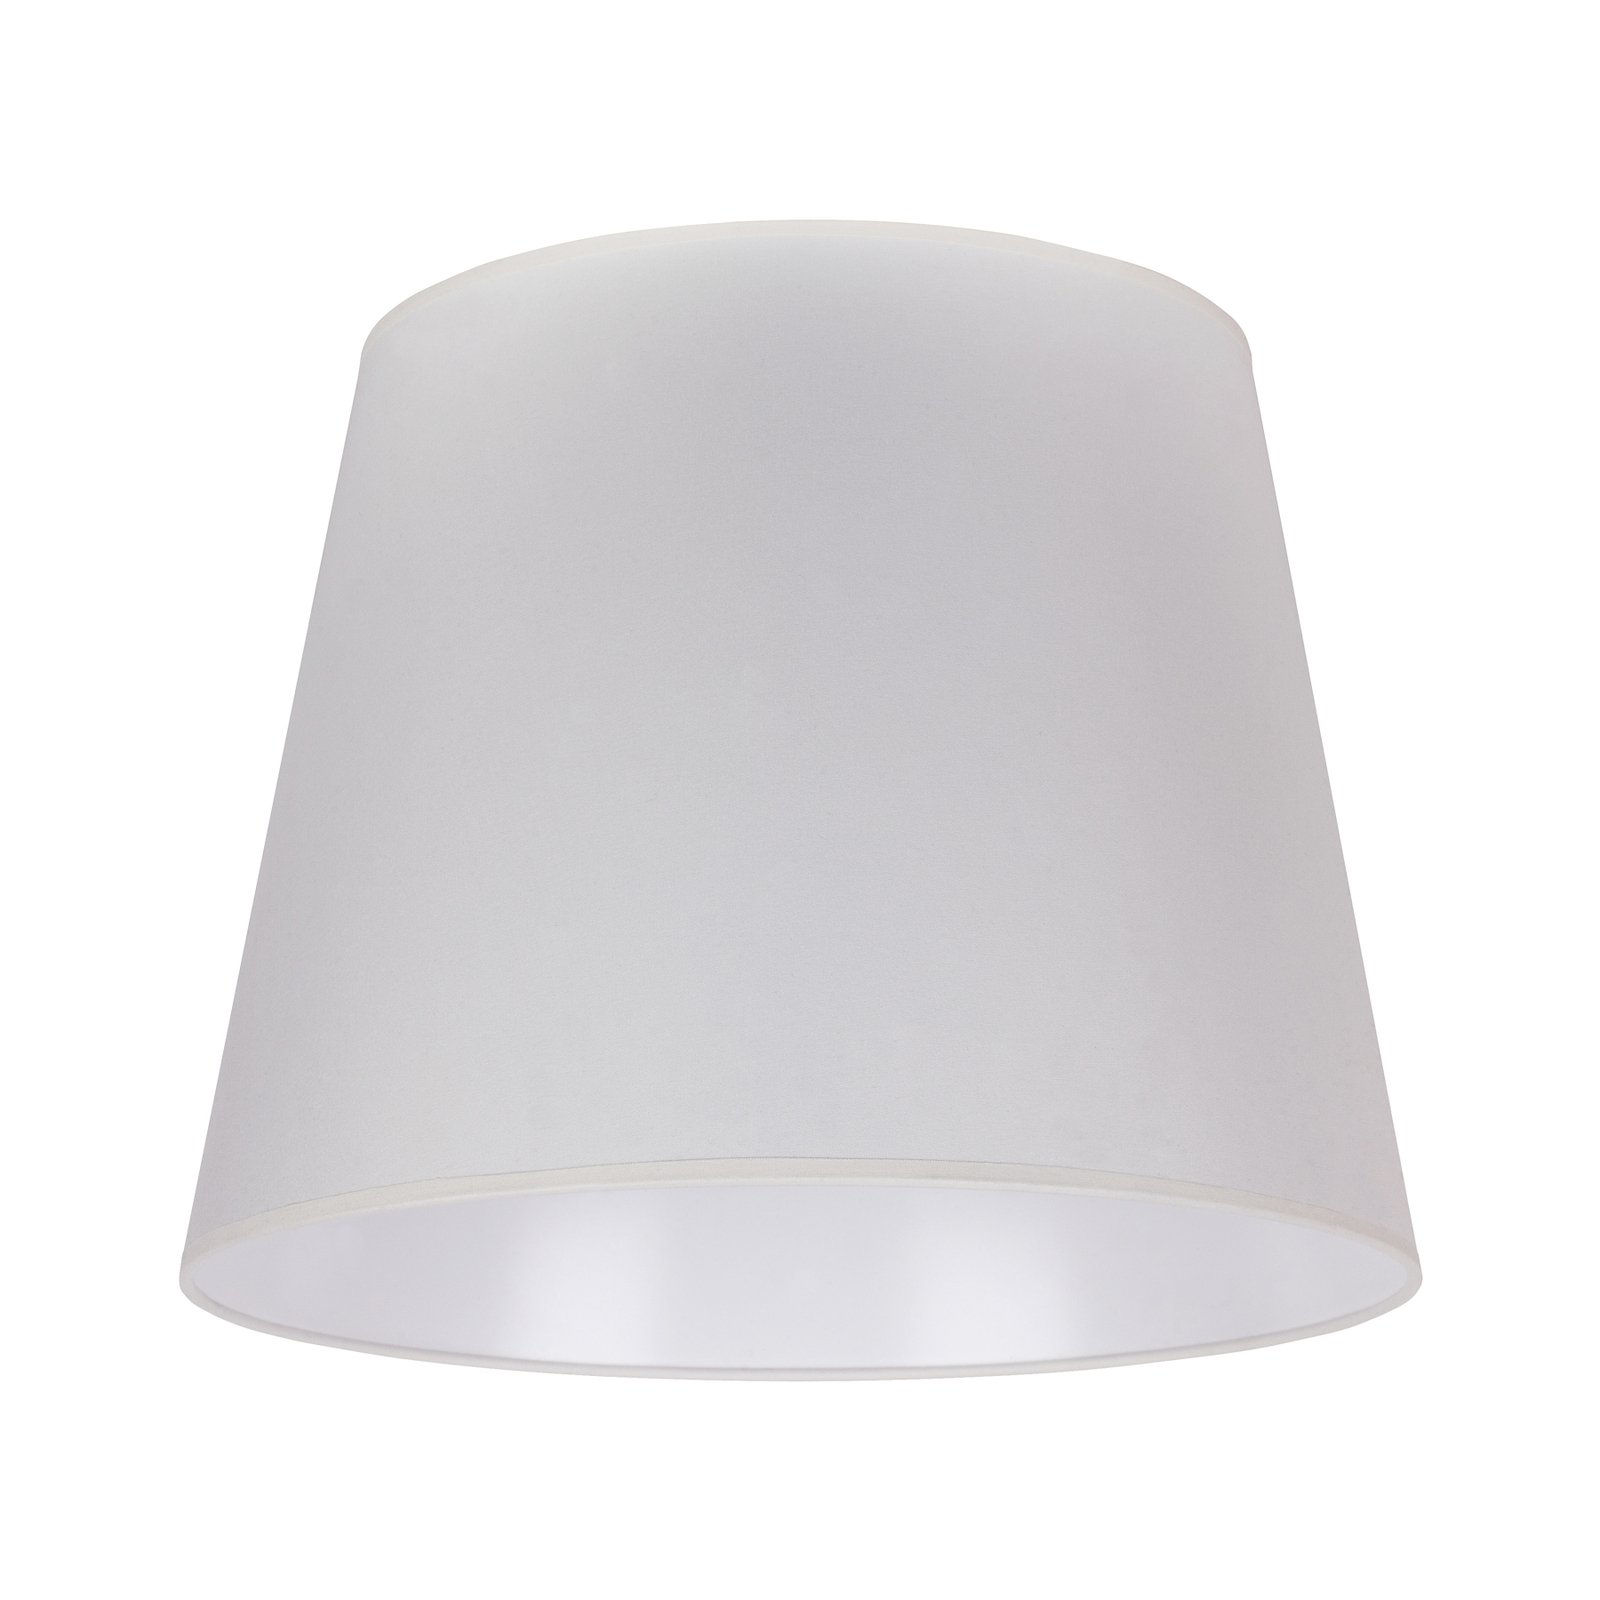 Classic L lampshade for floor lamps, ecru